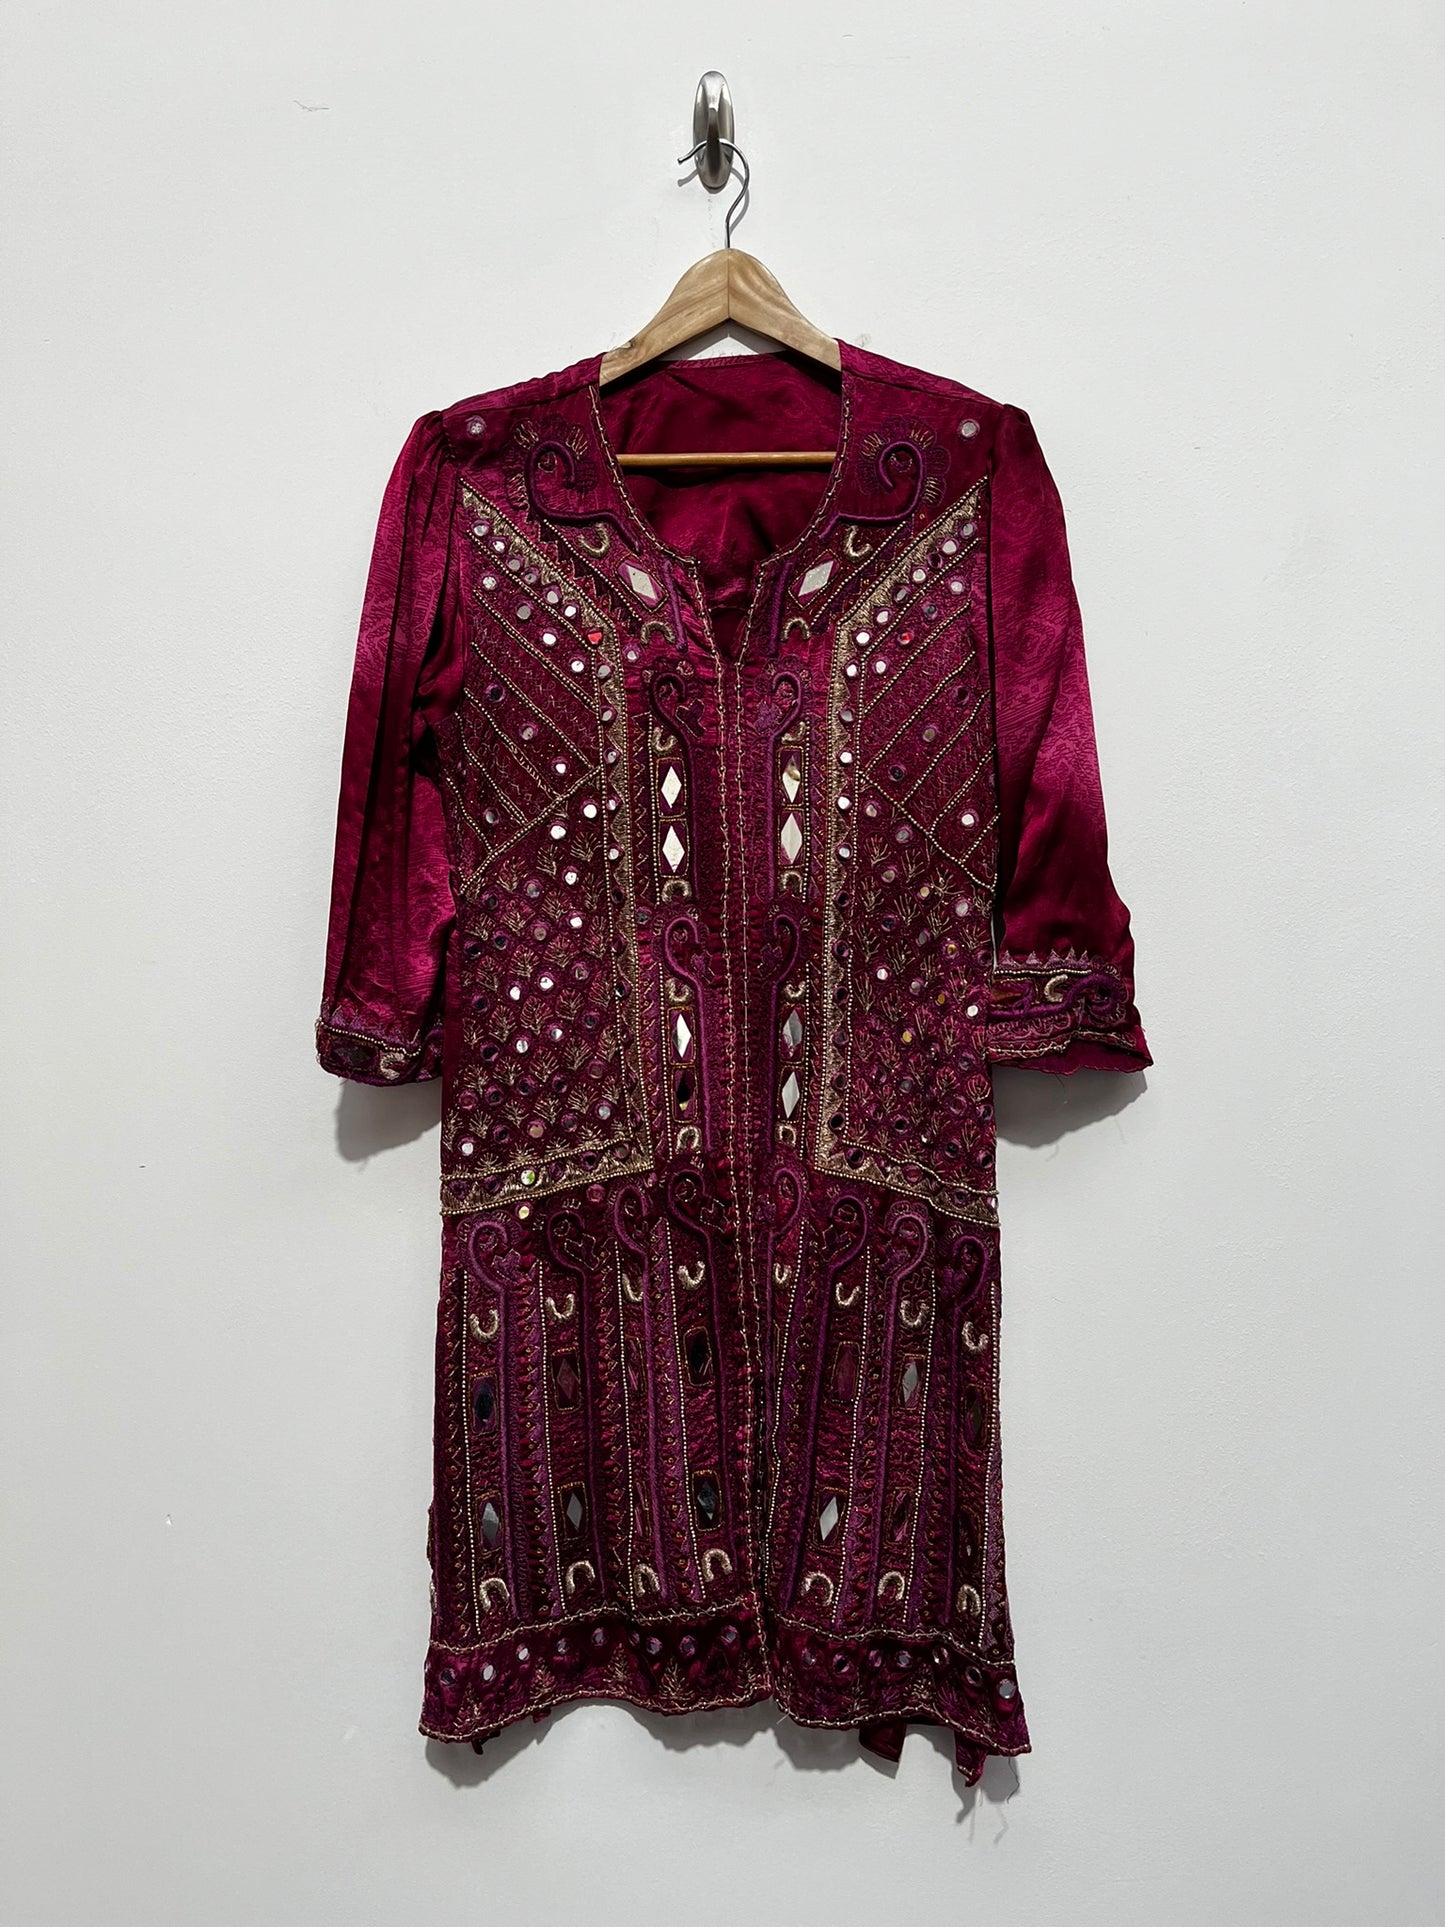 Maroon mirrored kaftan tunic dress Traditional Eastern Asian Moroccan Hippie Size M